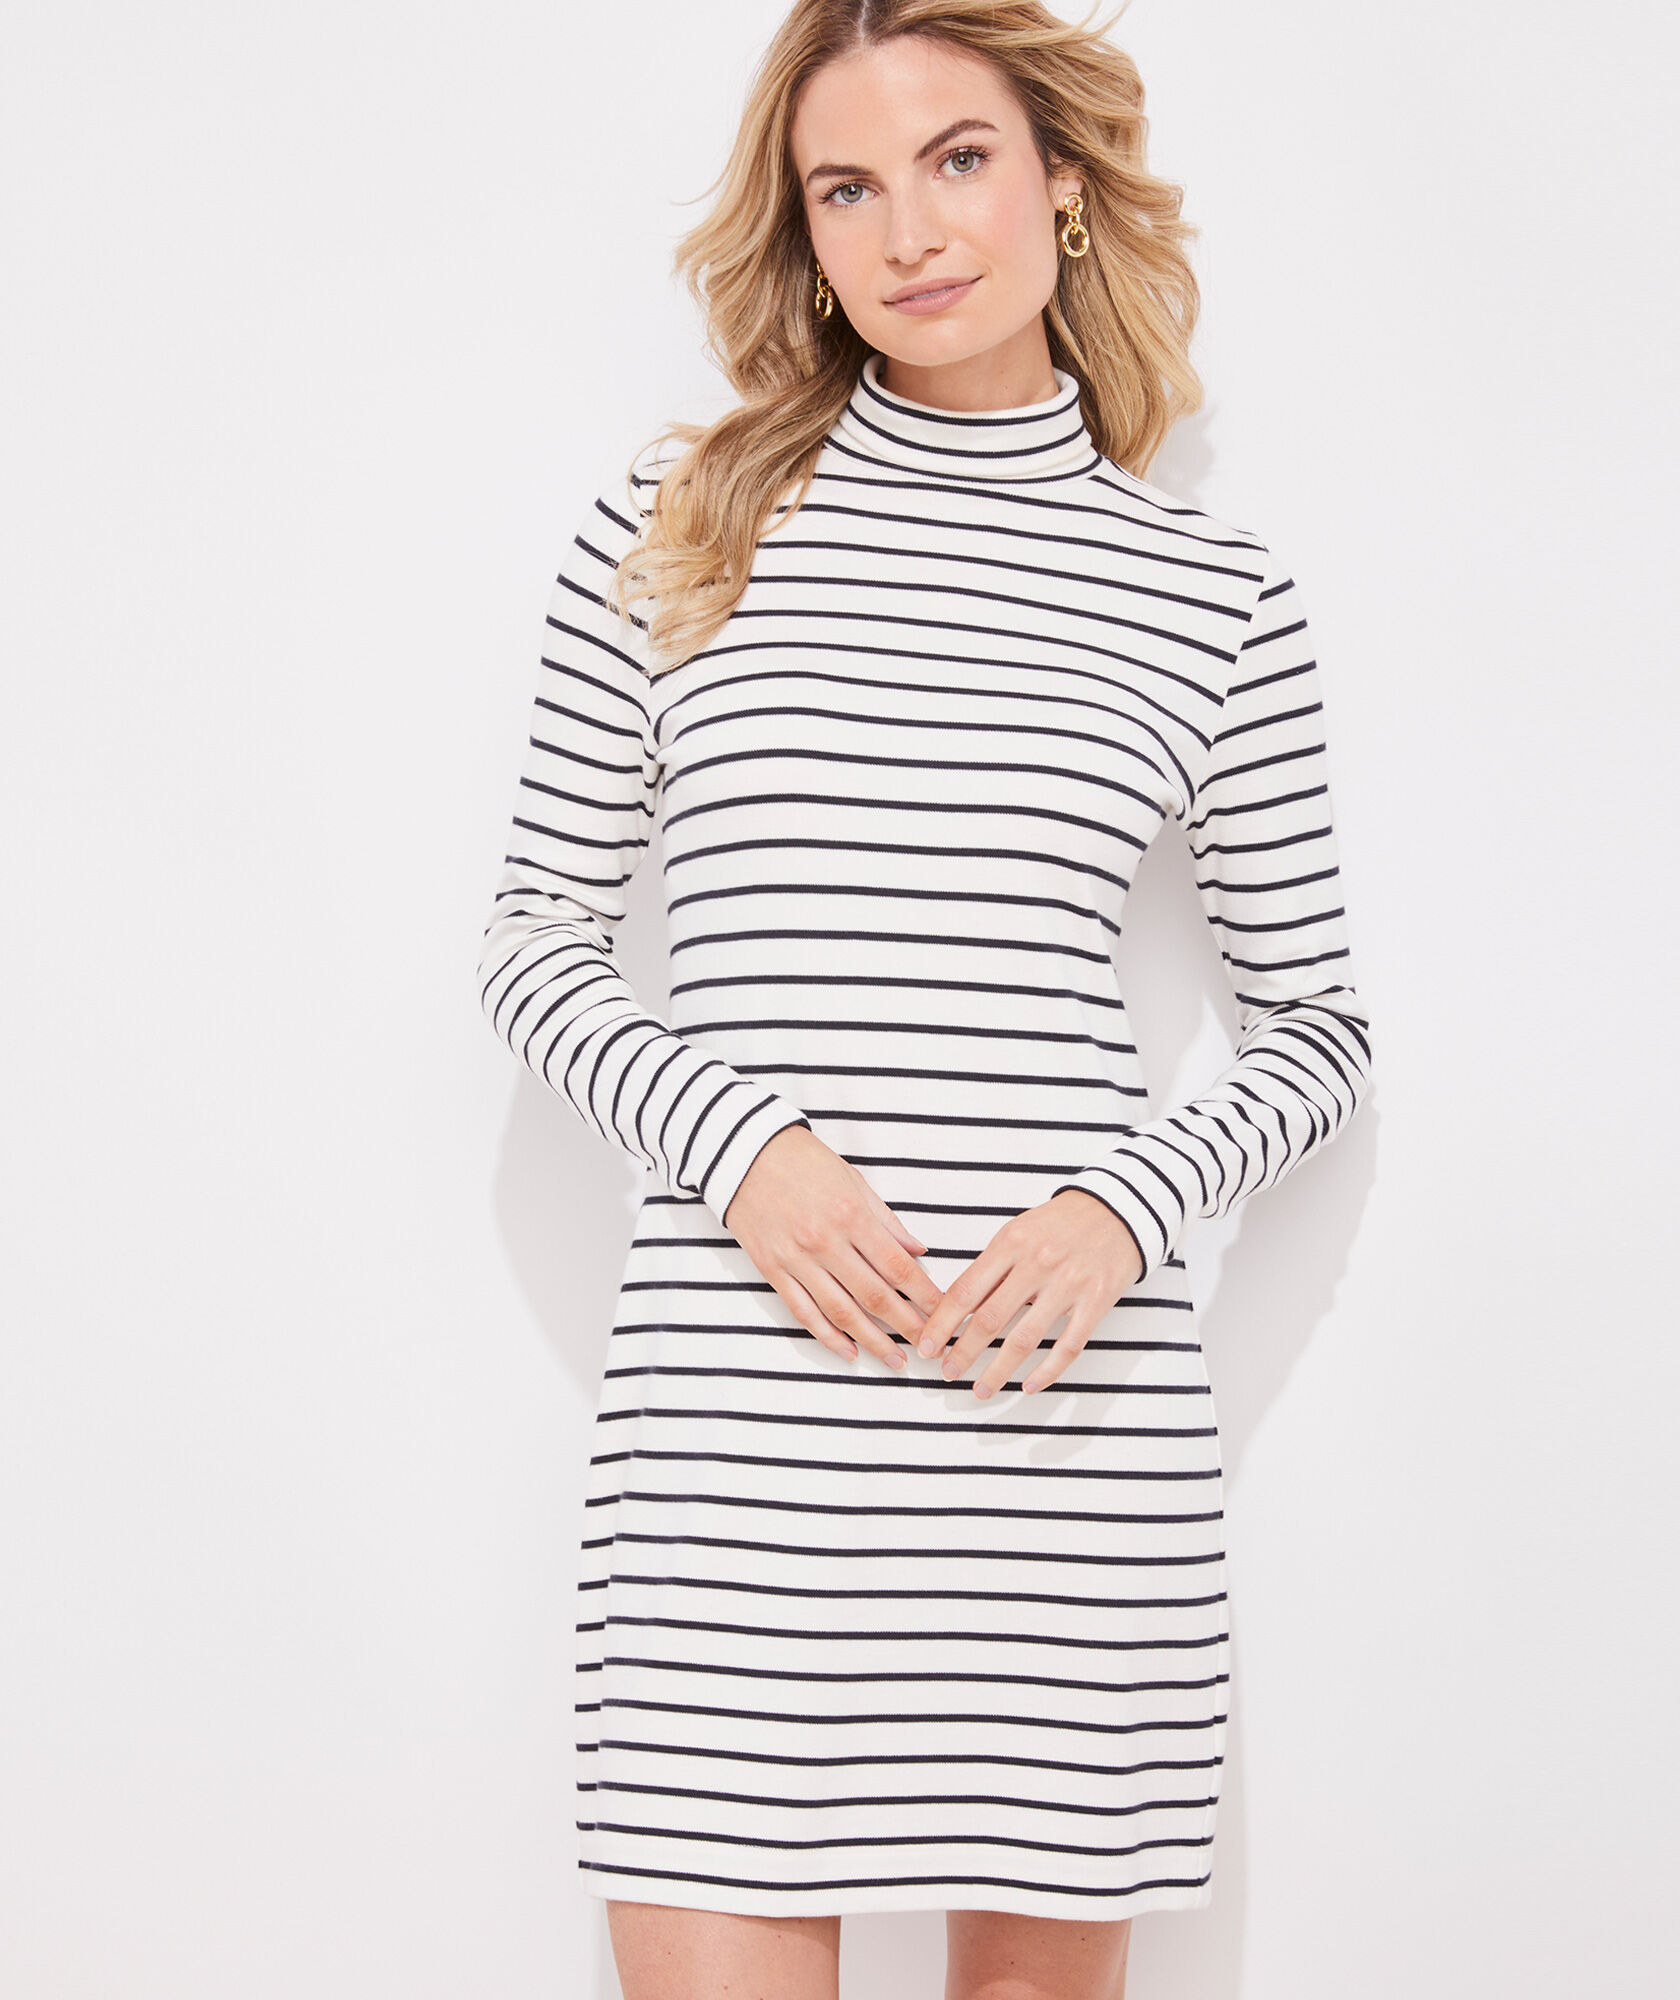 Model wearing striped Vineyard Vines turtleneck dress